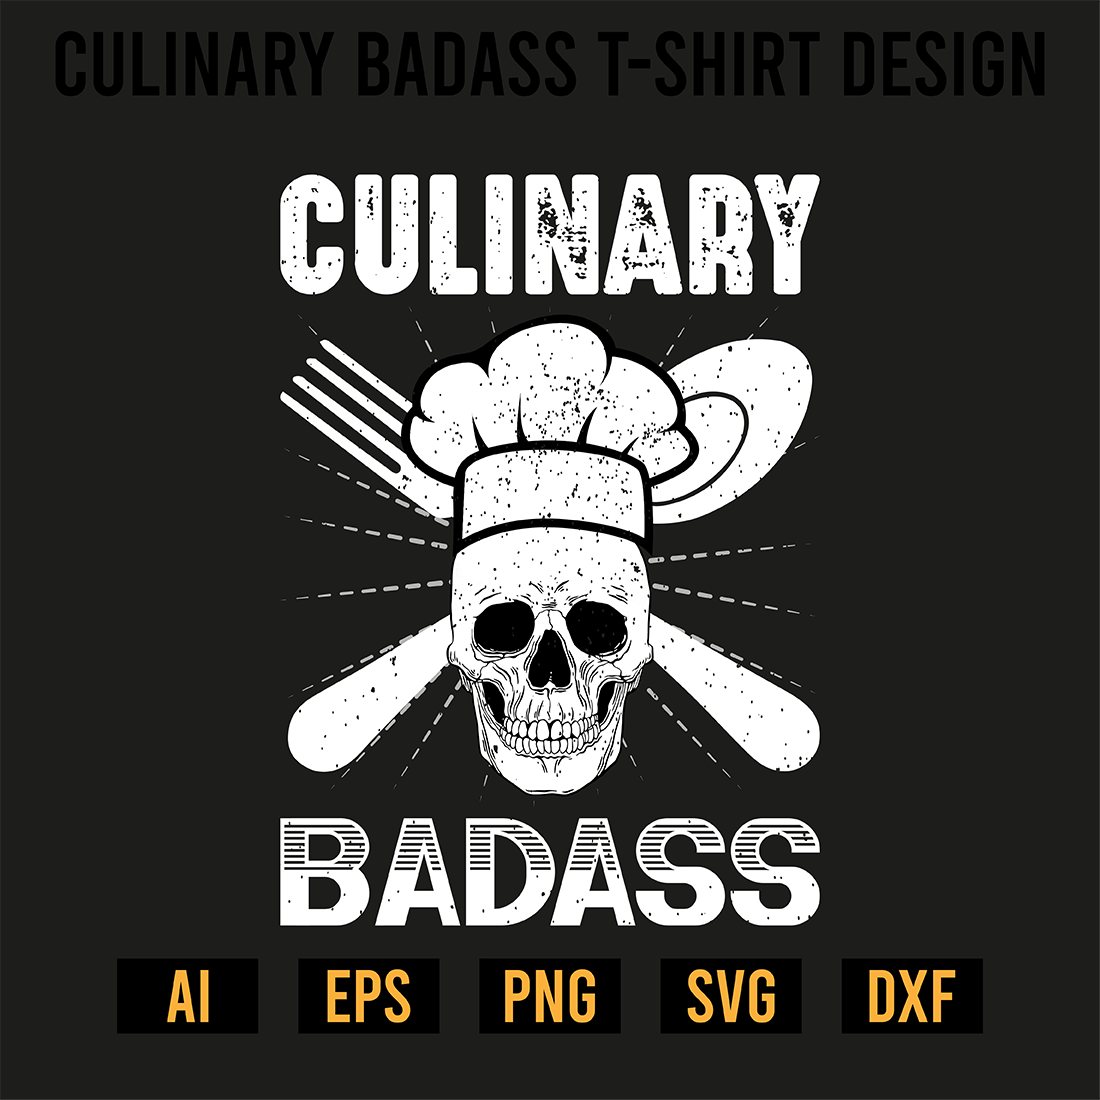 Culinary Badass T-Shirt Design preview image.